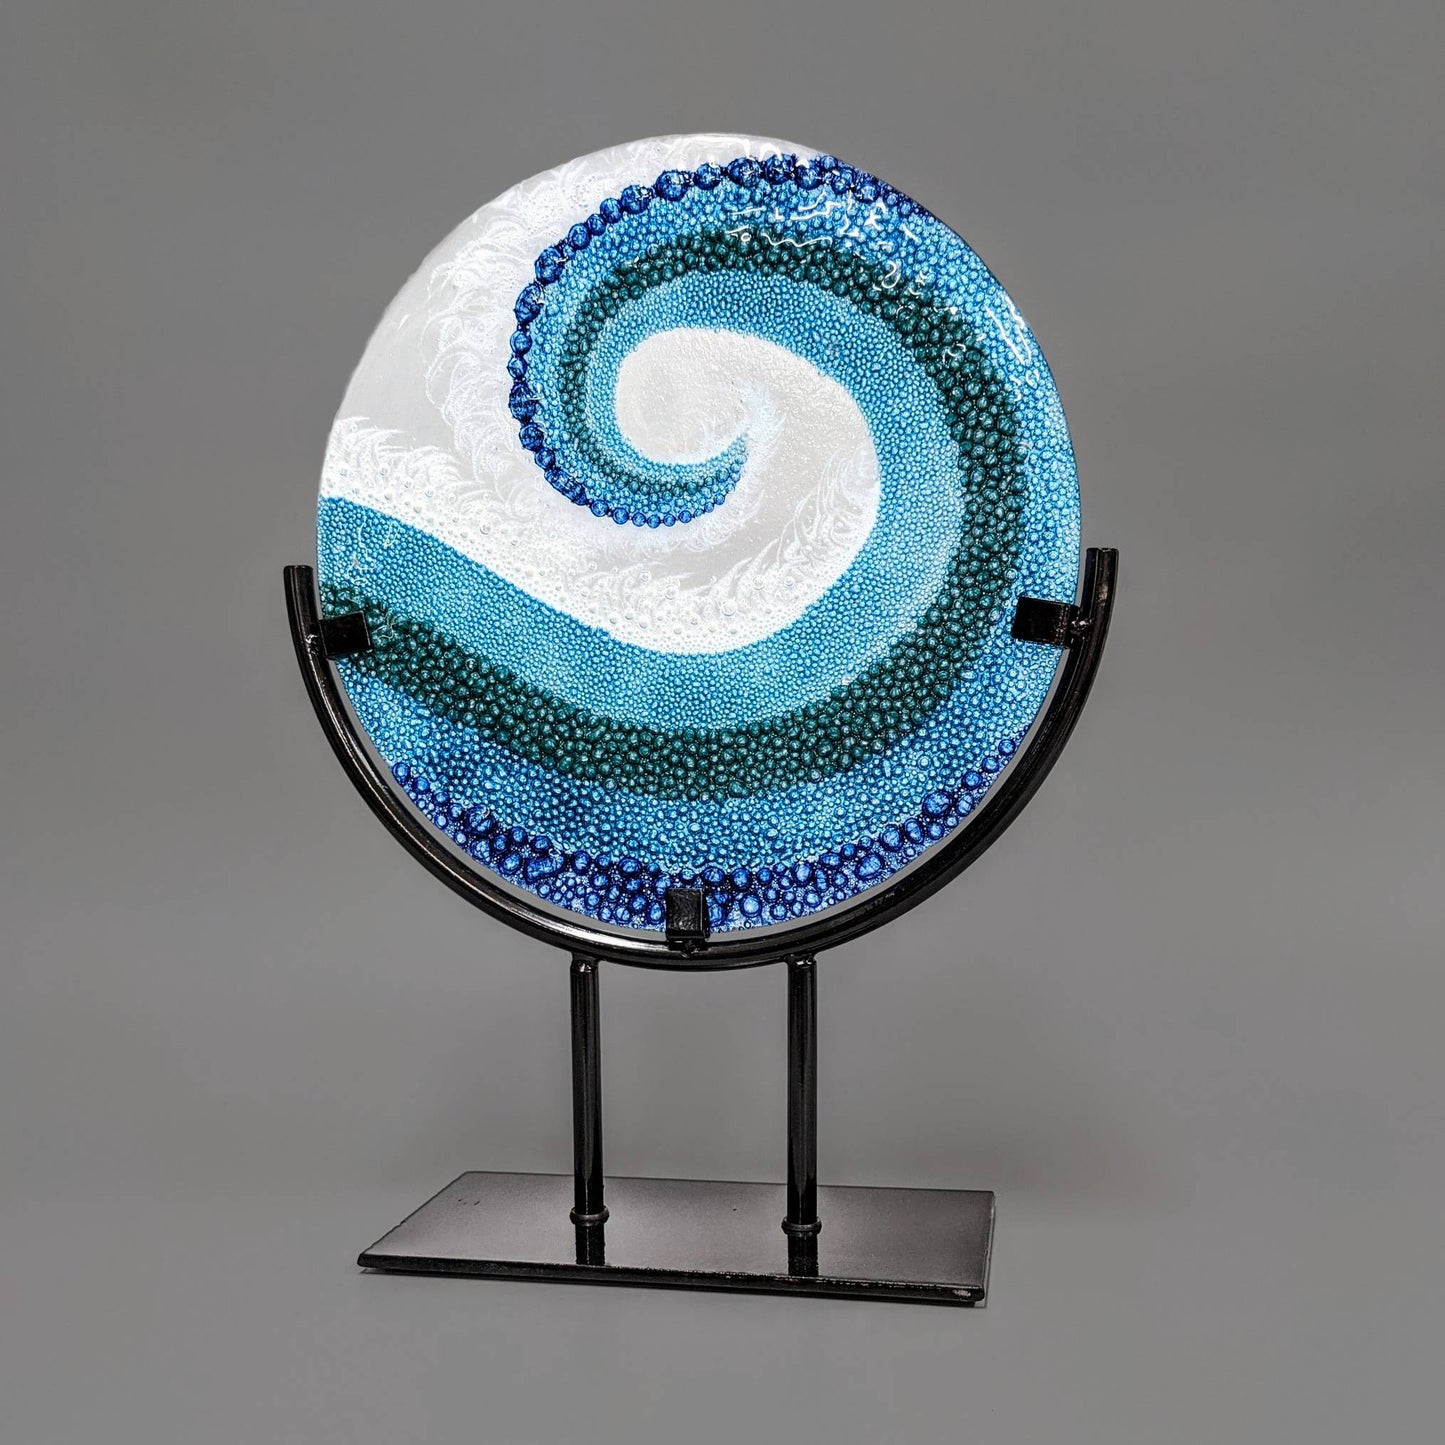 Fused Glass Art Pipeline Ocean Wave Medium